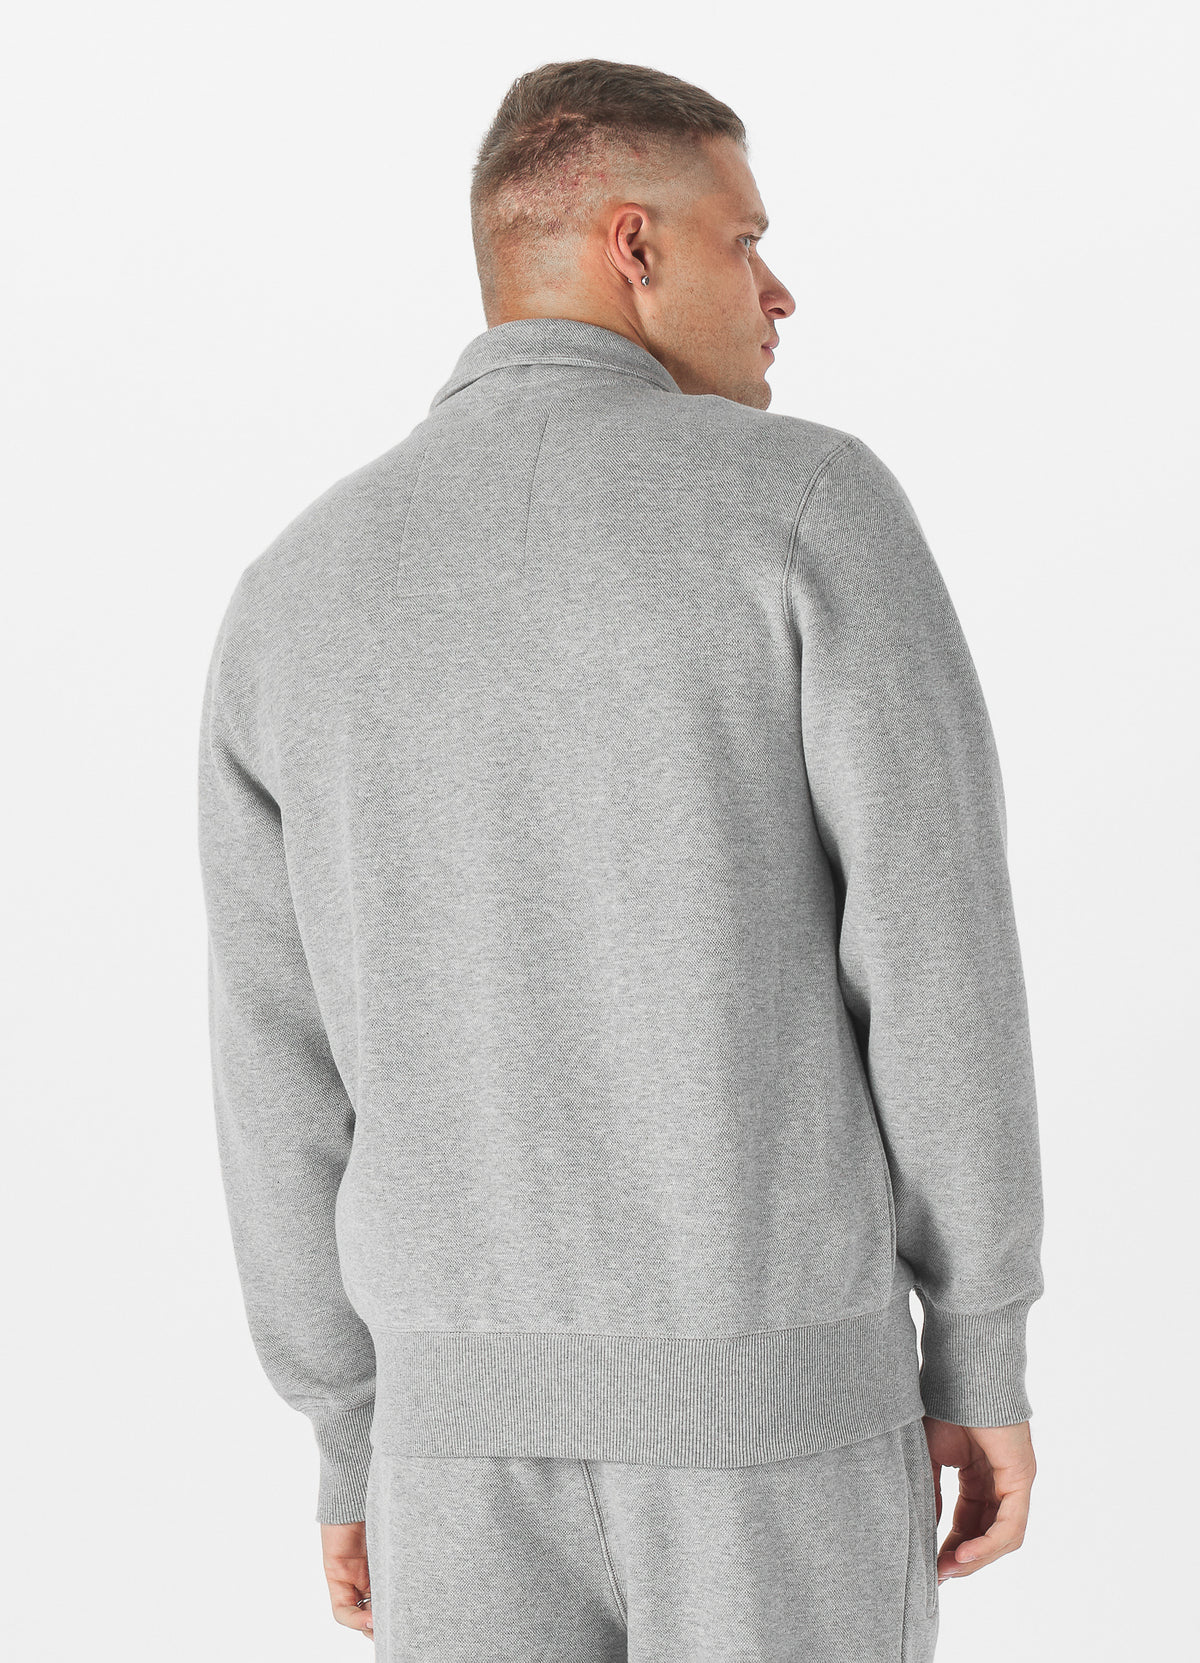 NEW LOGO Premium Pique Grey Sweatjacket.